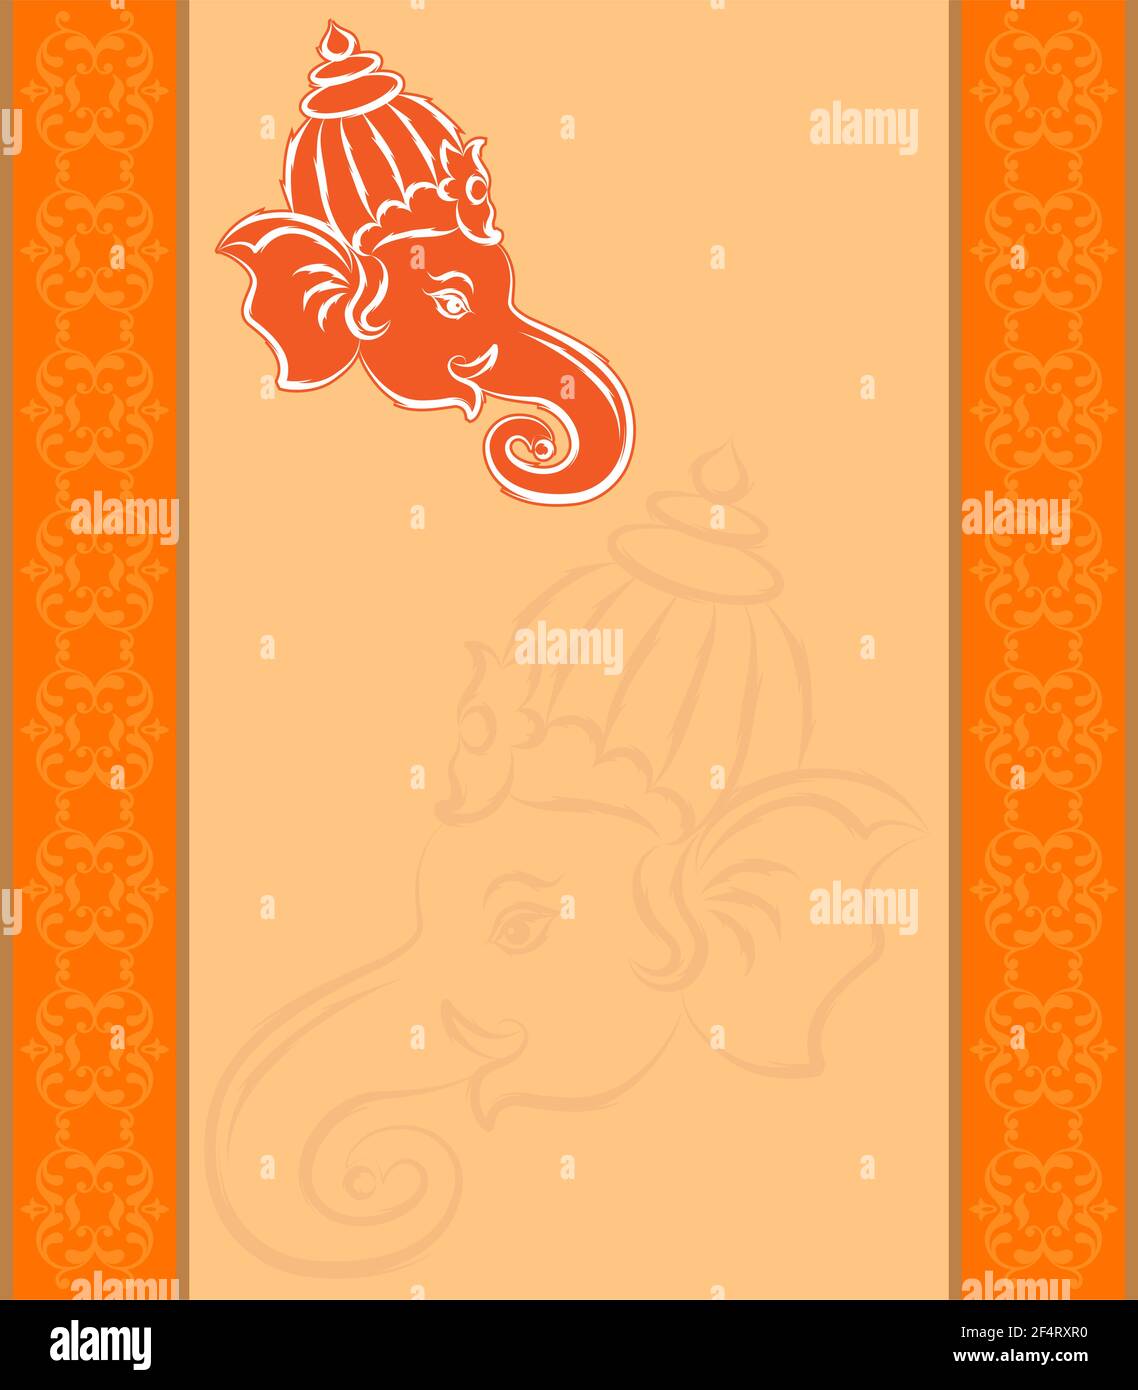 Ganesha The Lord Of Wisdom Design Vector Art Illustration Stock Vector  Image & Art - Alamy